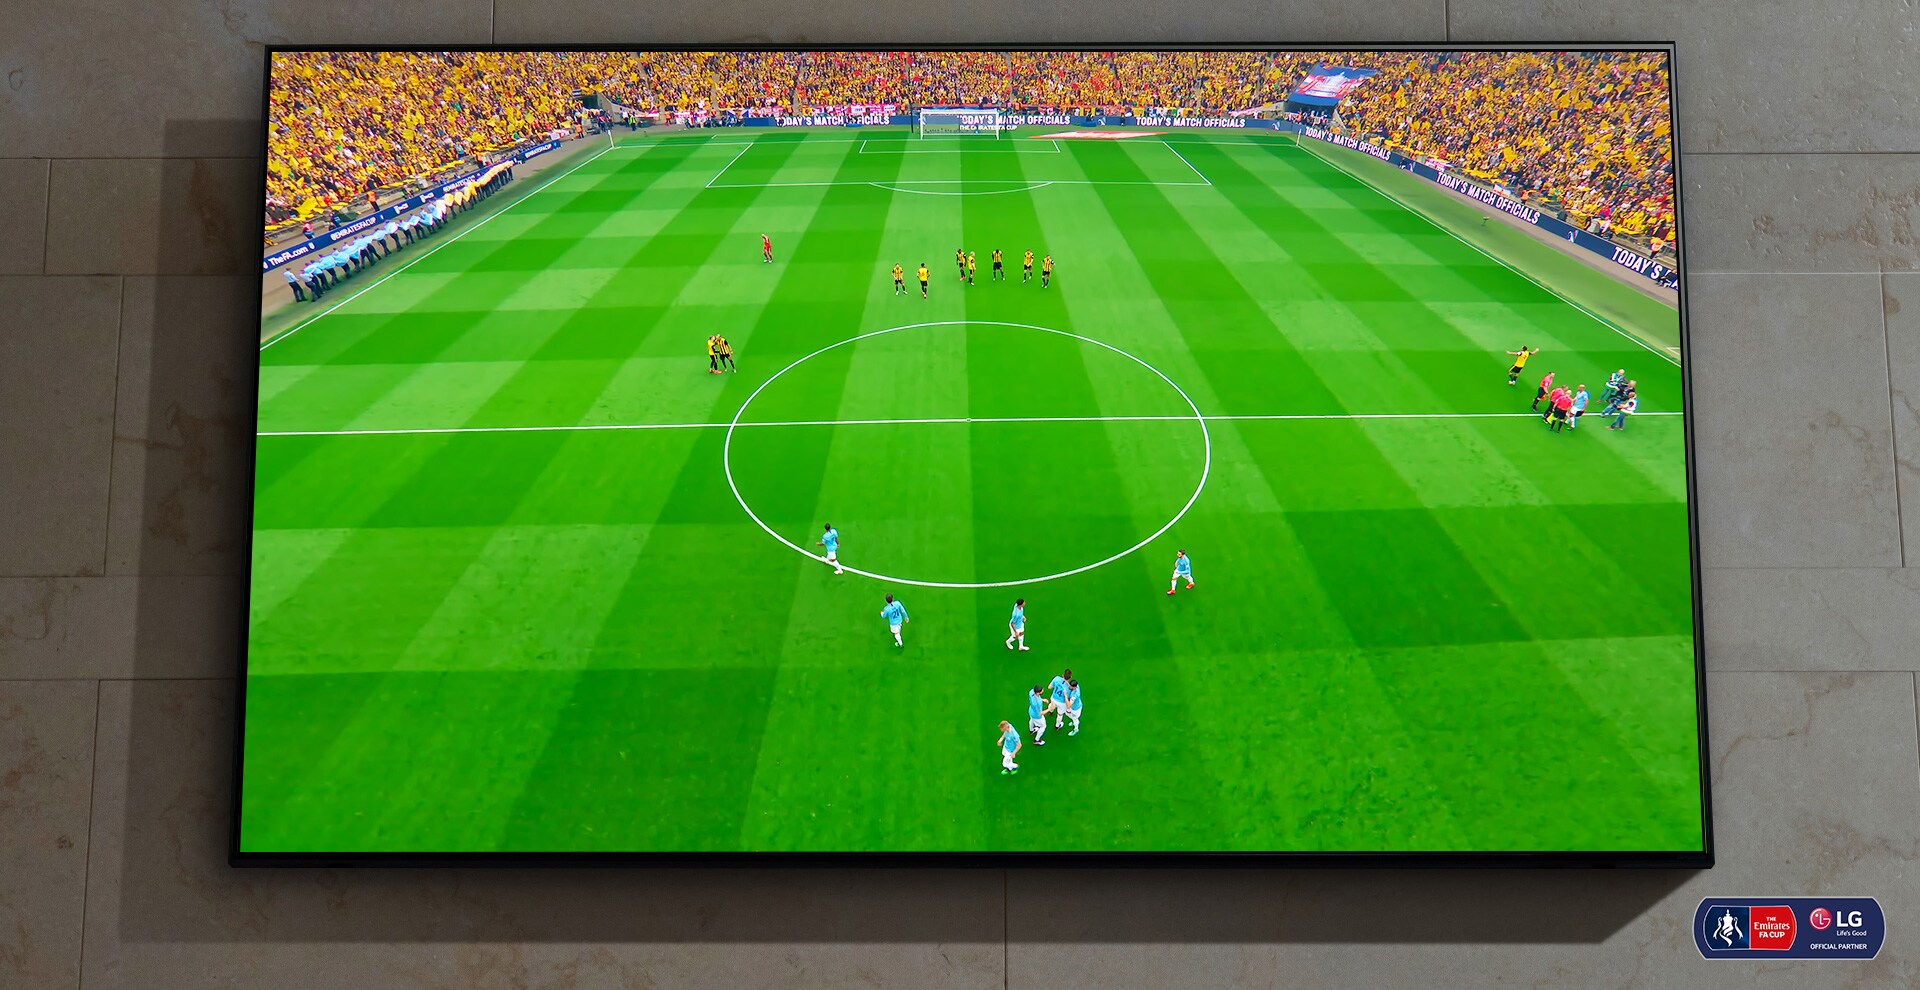 Televizor NanoCell montiran je na zid. Na zaslonu je prikazana nogometna utakmica koja upravo počinje.